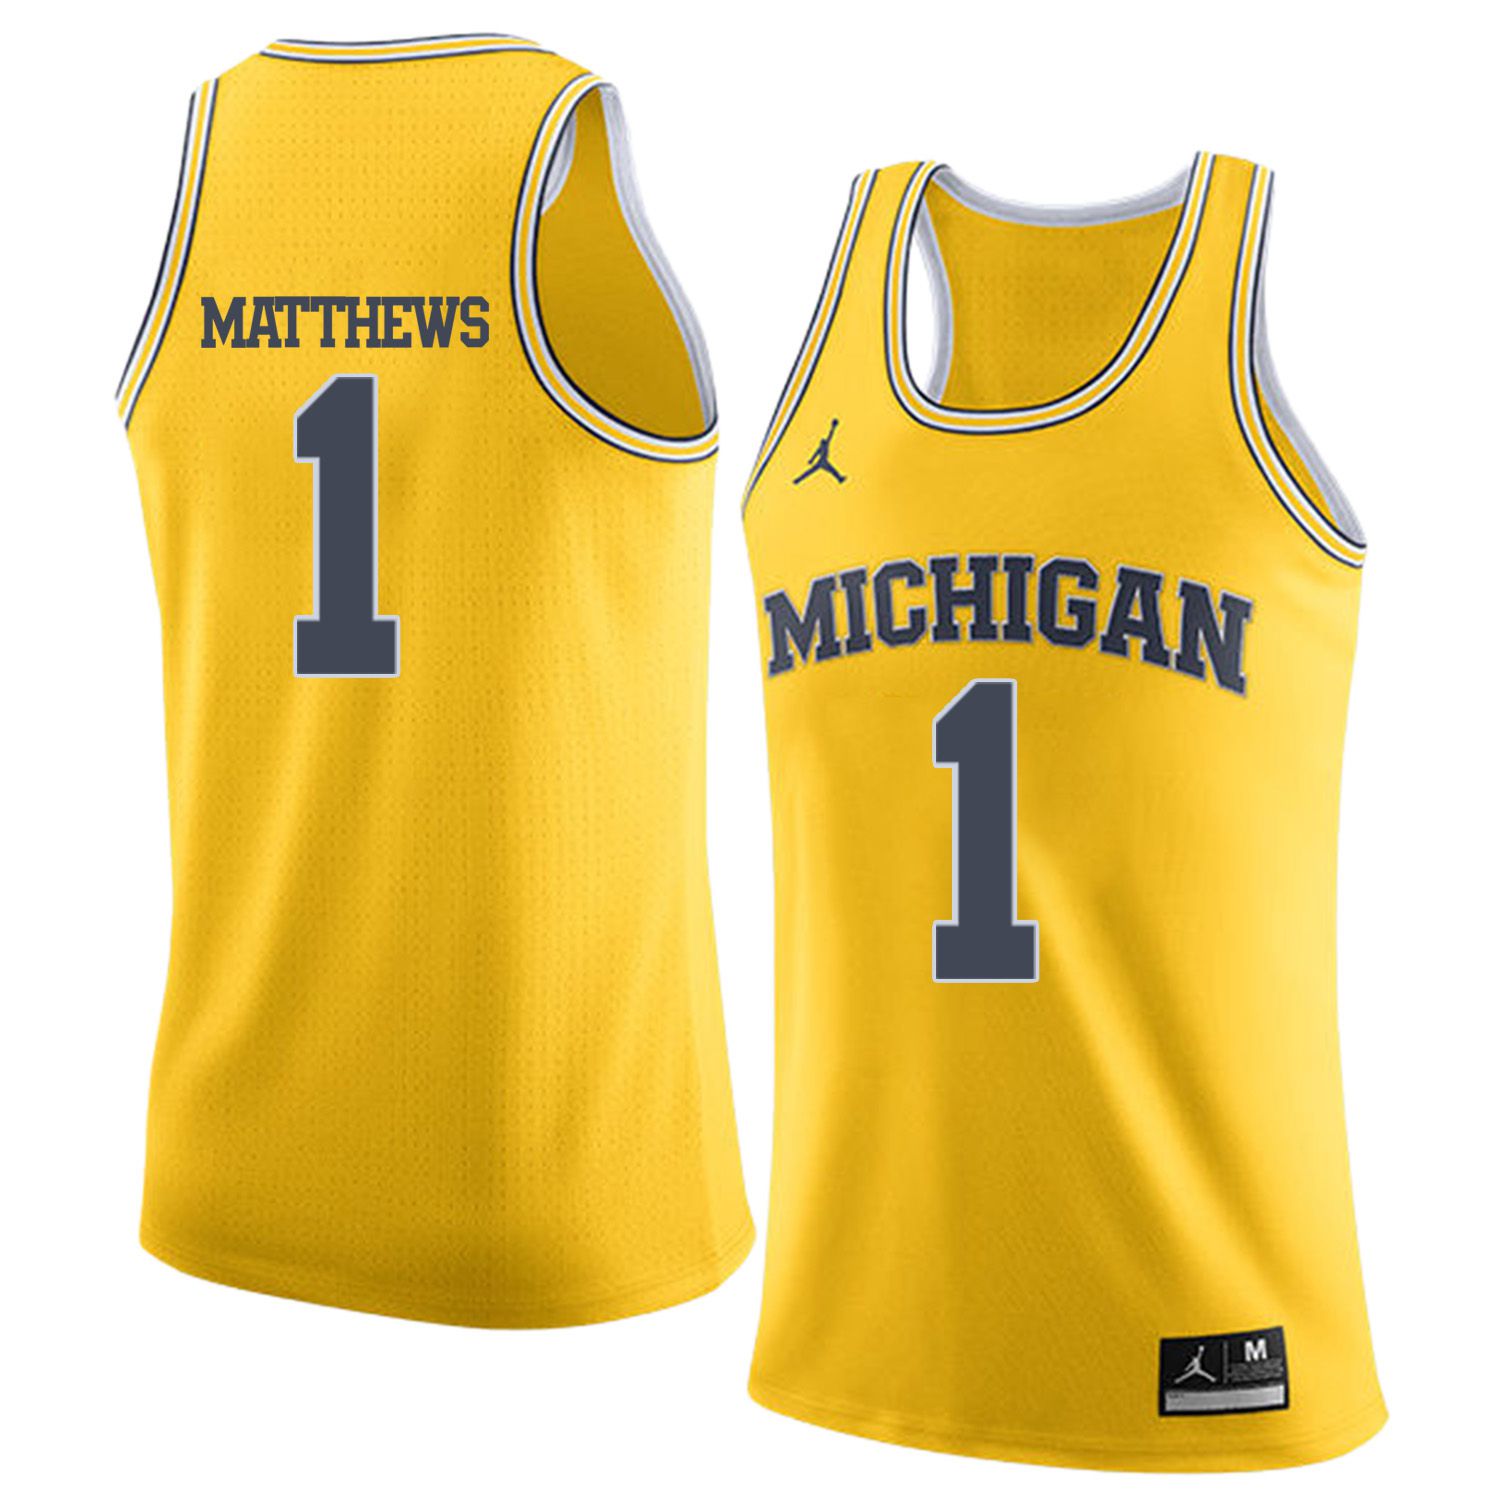 Men Jordan University of Michigan Basketball Yellow 1 Matthews Customized NCAA Jerseys